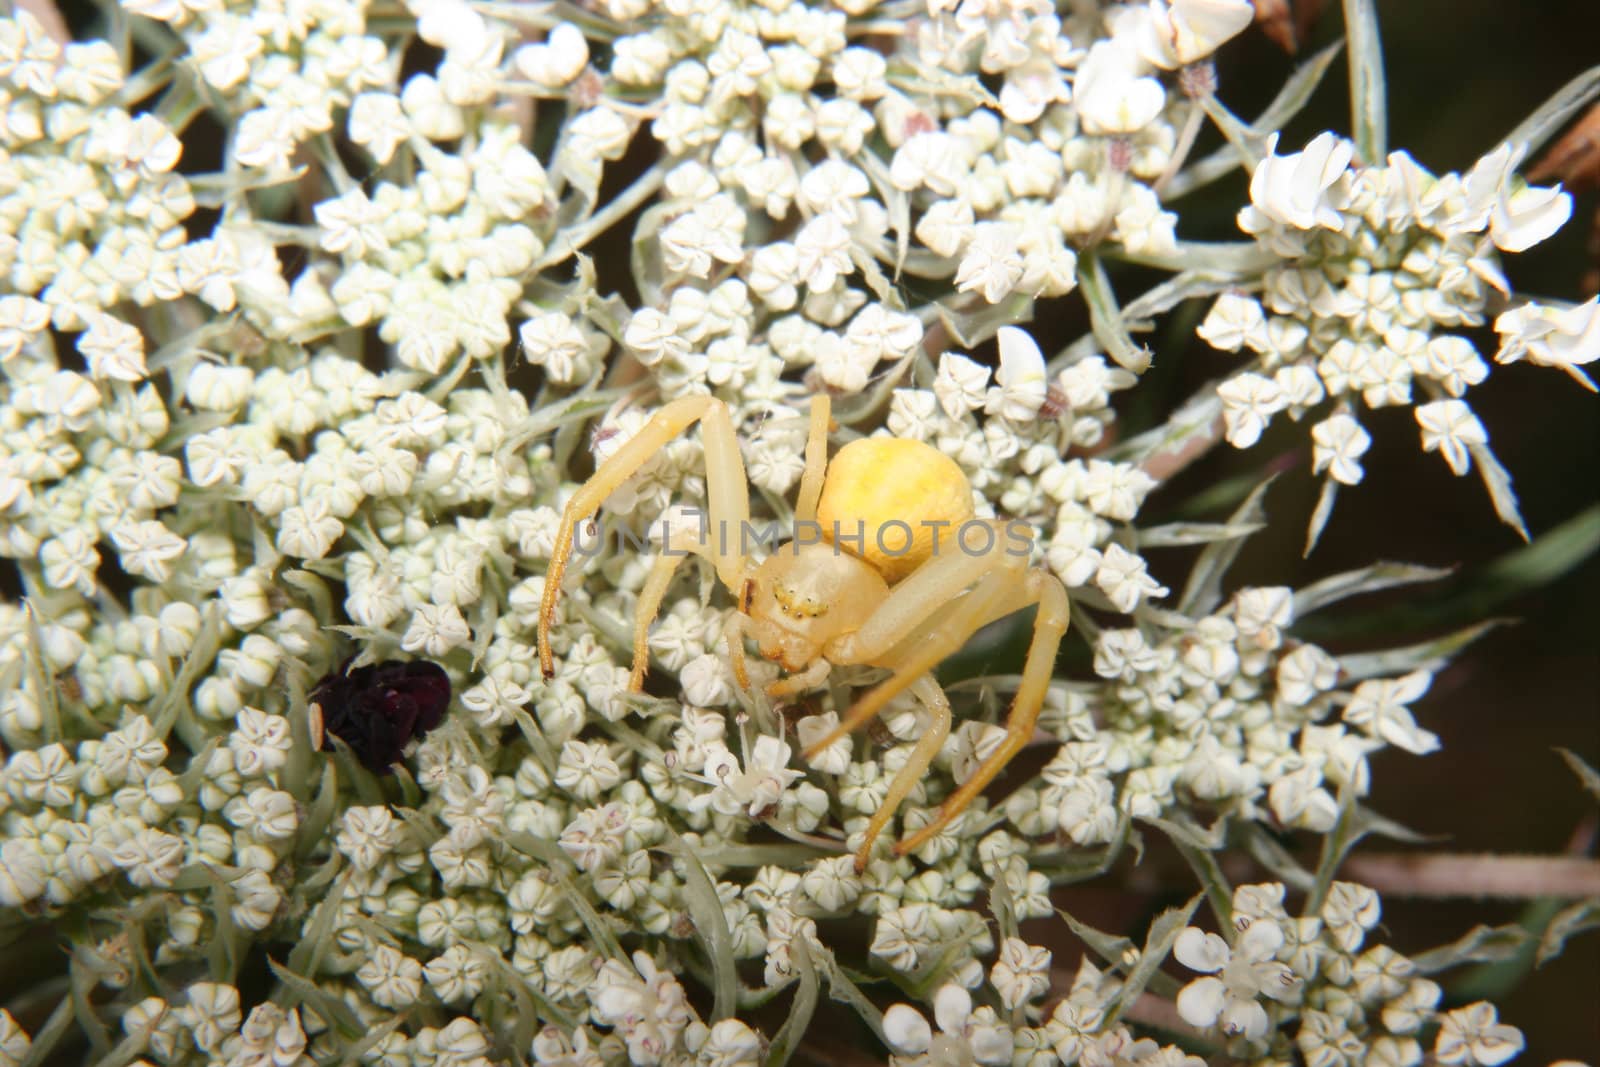 Goldenrod crab spider (Misumena vatia) - Female on a flower